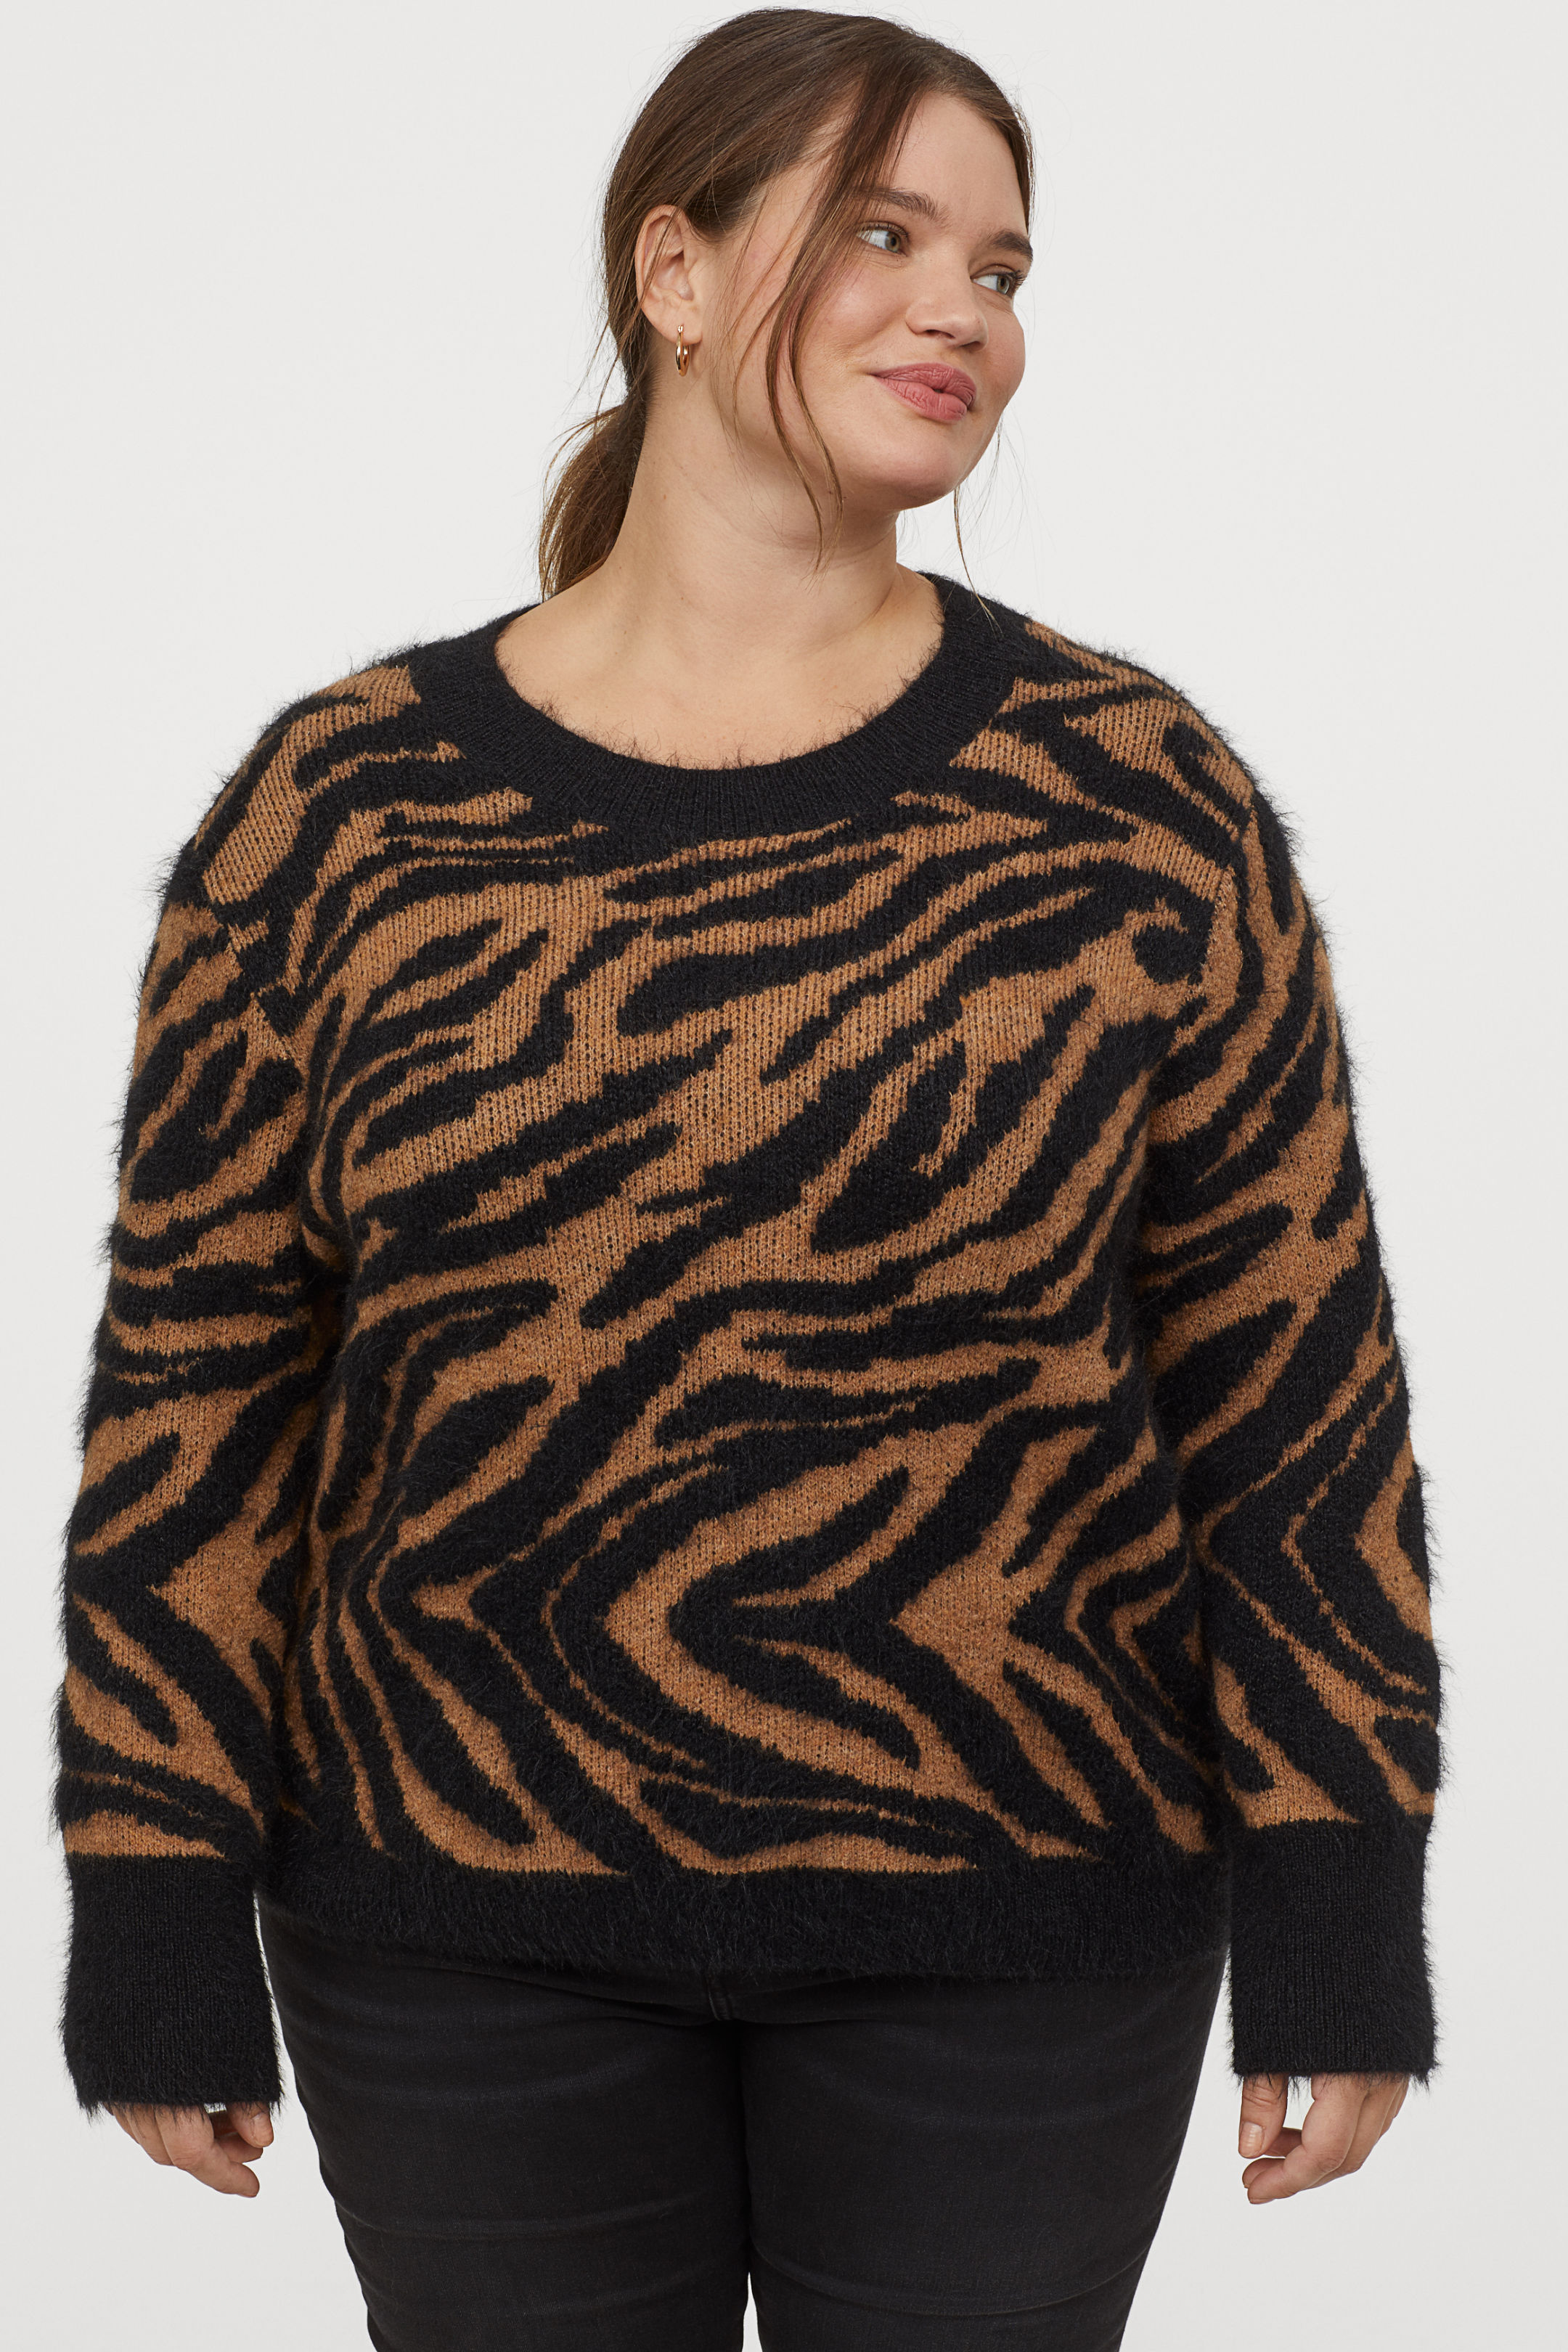 h&m tiger sweater